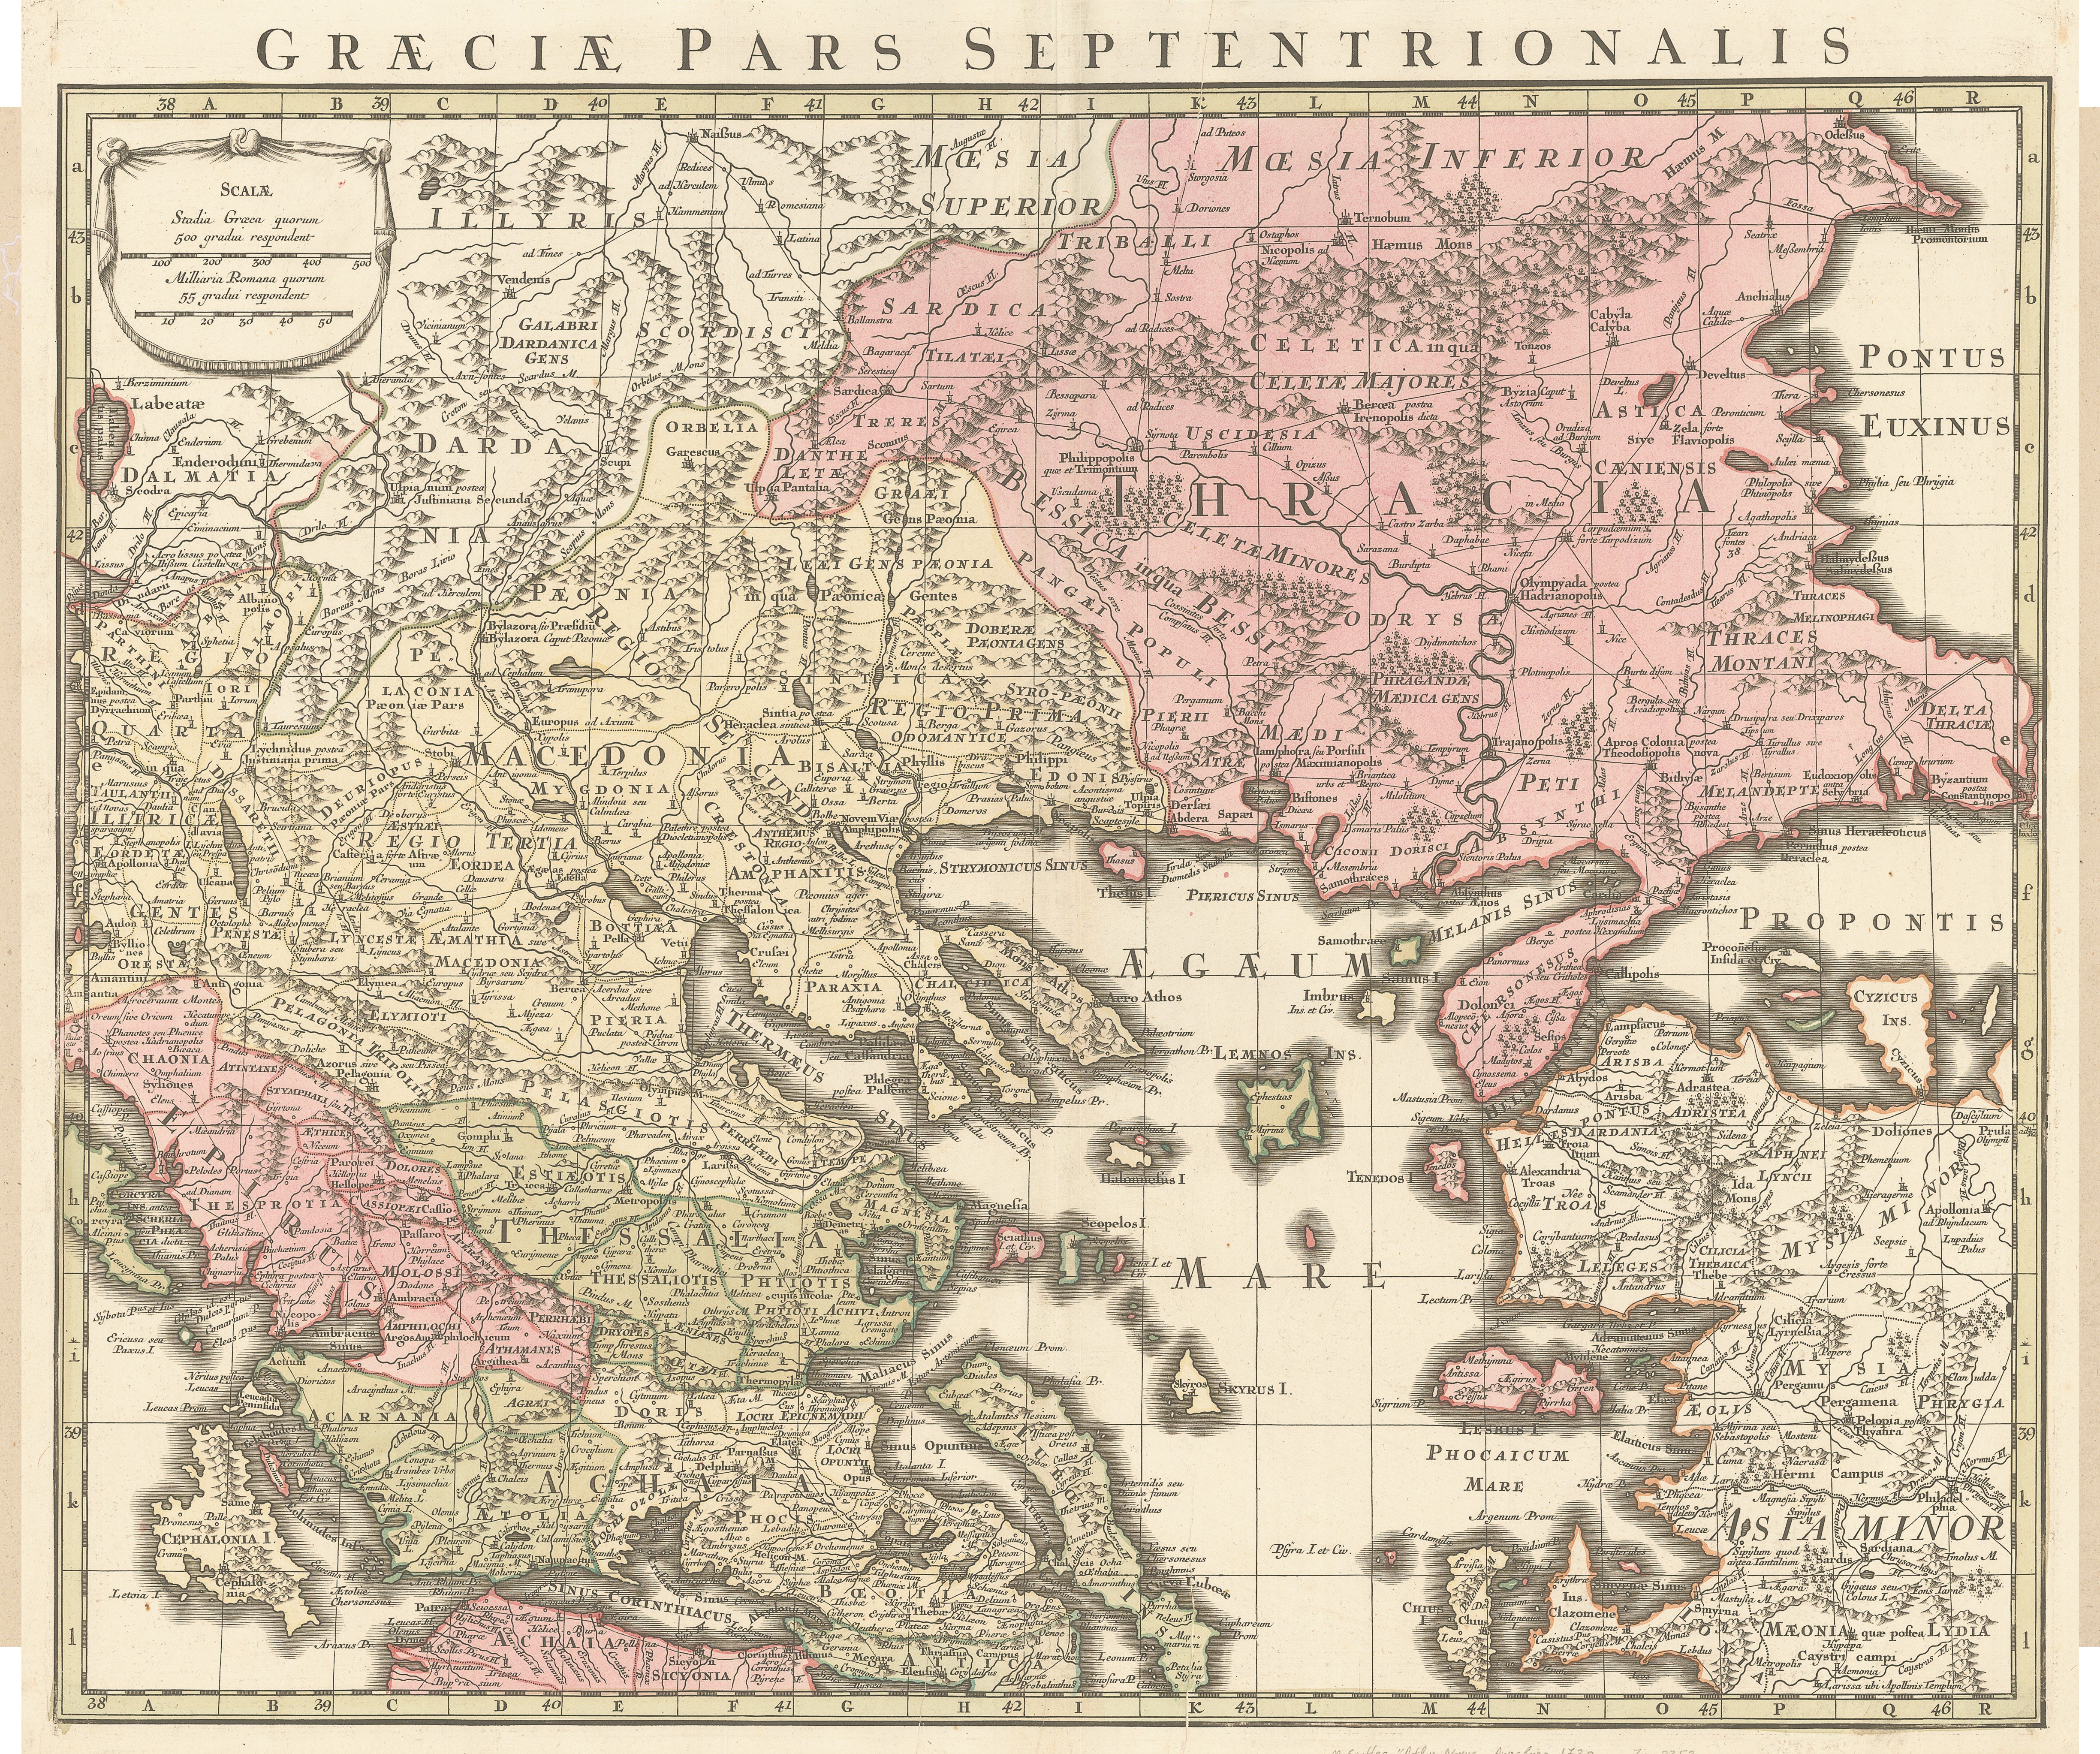  GEORGE MATTHAEUS SEUTTER. ΑΟΥΓΚΣΜΠΟΥΡΓΚ  1730. Χάρτης με τίτλο «Ελλάς, τμήμα βόρειο», όπου στο κέντρο αυτής της περιοχής βρίσκεται η Μακεδονία κατά την πρώτη ρωμαϊκή περίοδο (168 π.Χ.- 148 π.Χ.) με τις 4 μερίδες. (Ιδιωτική Συλλογή)